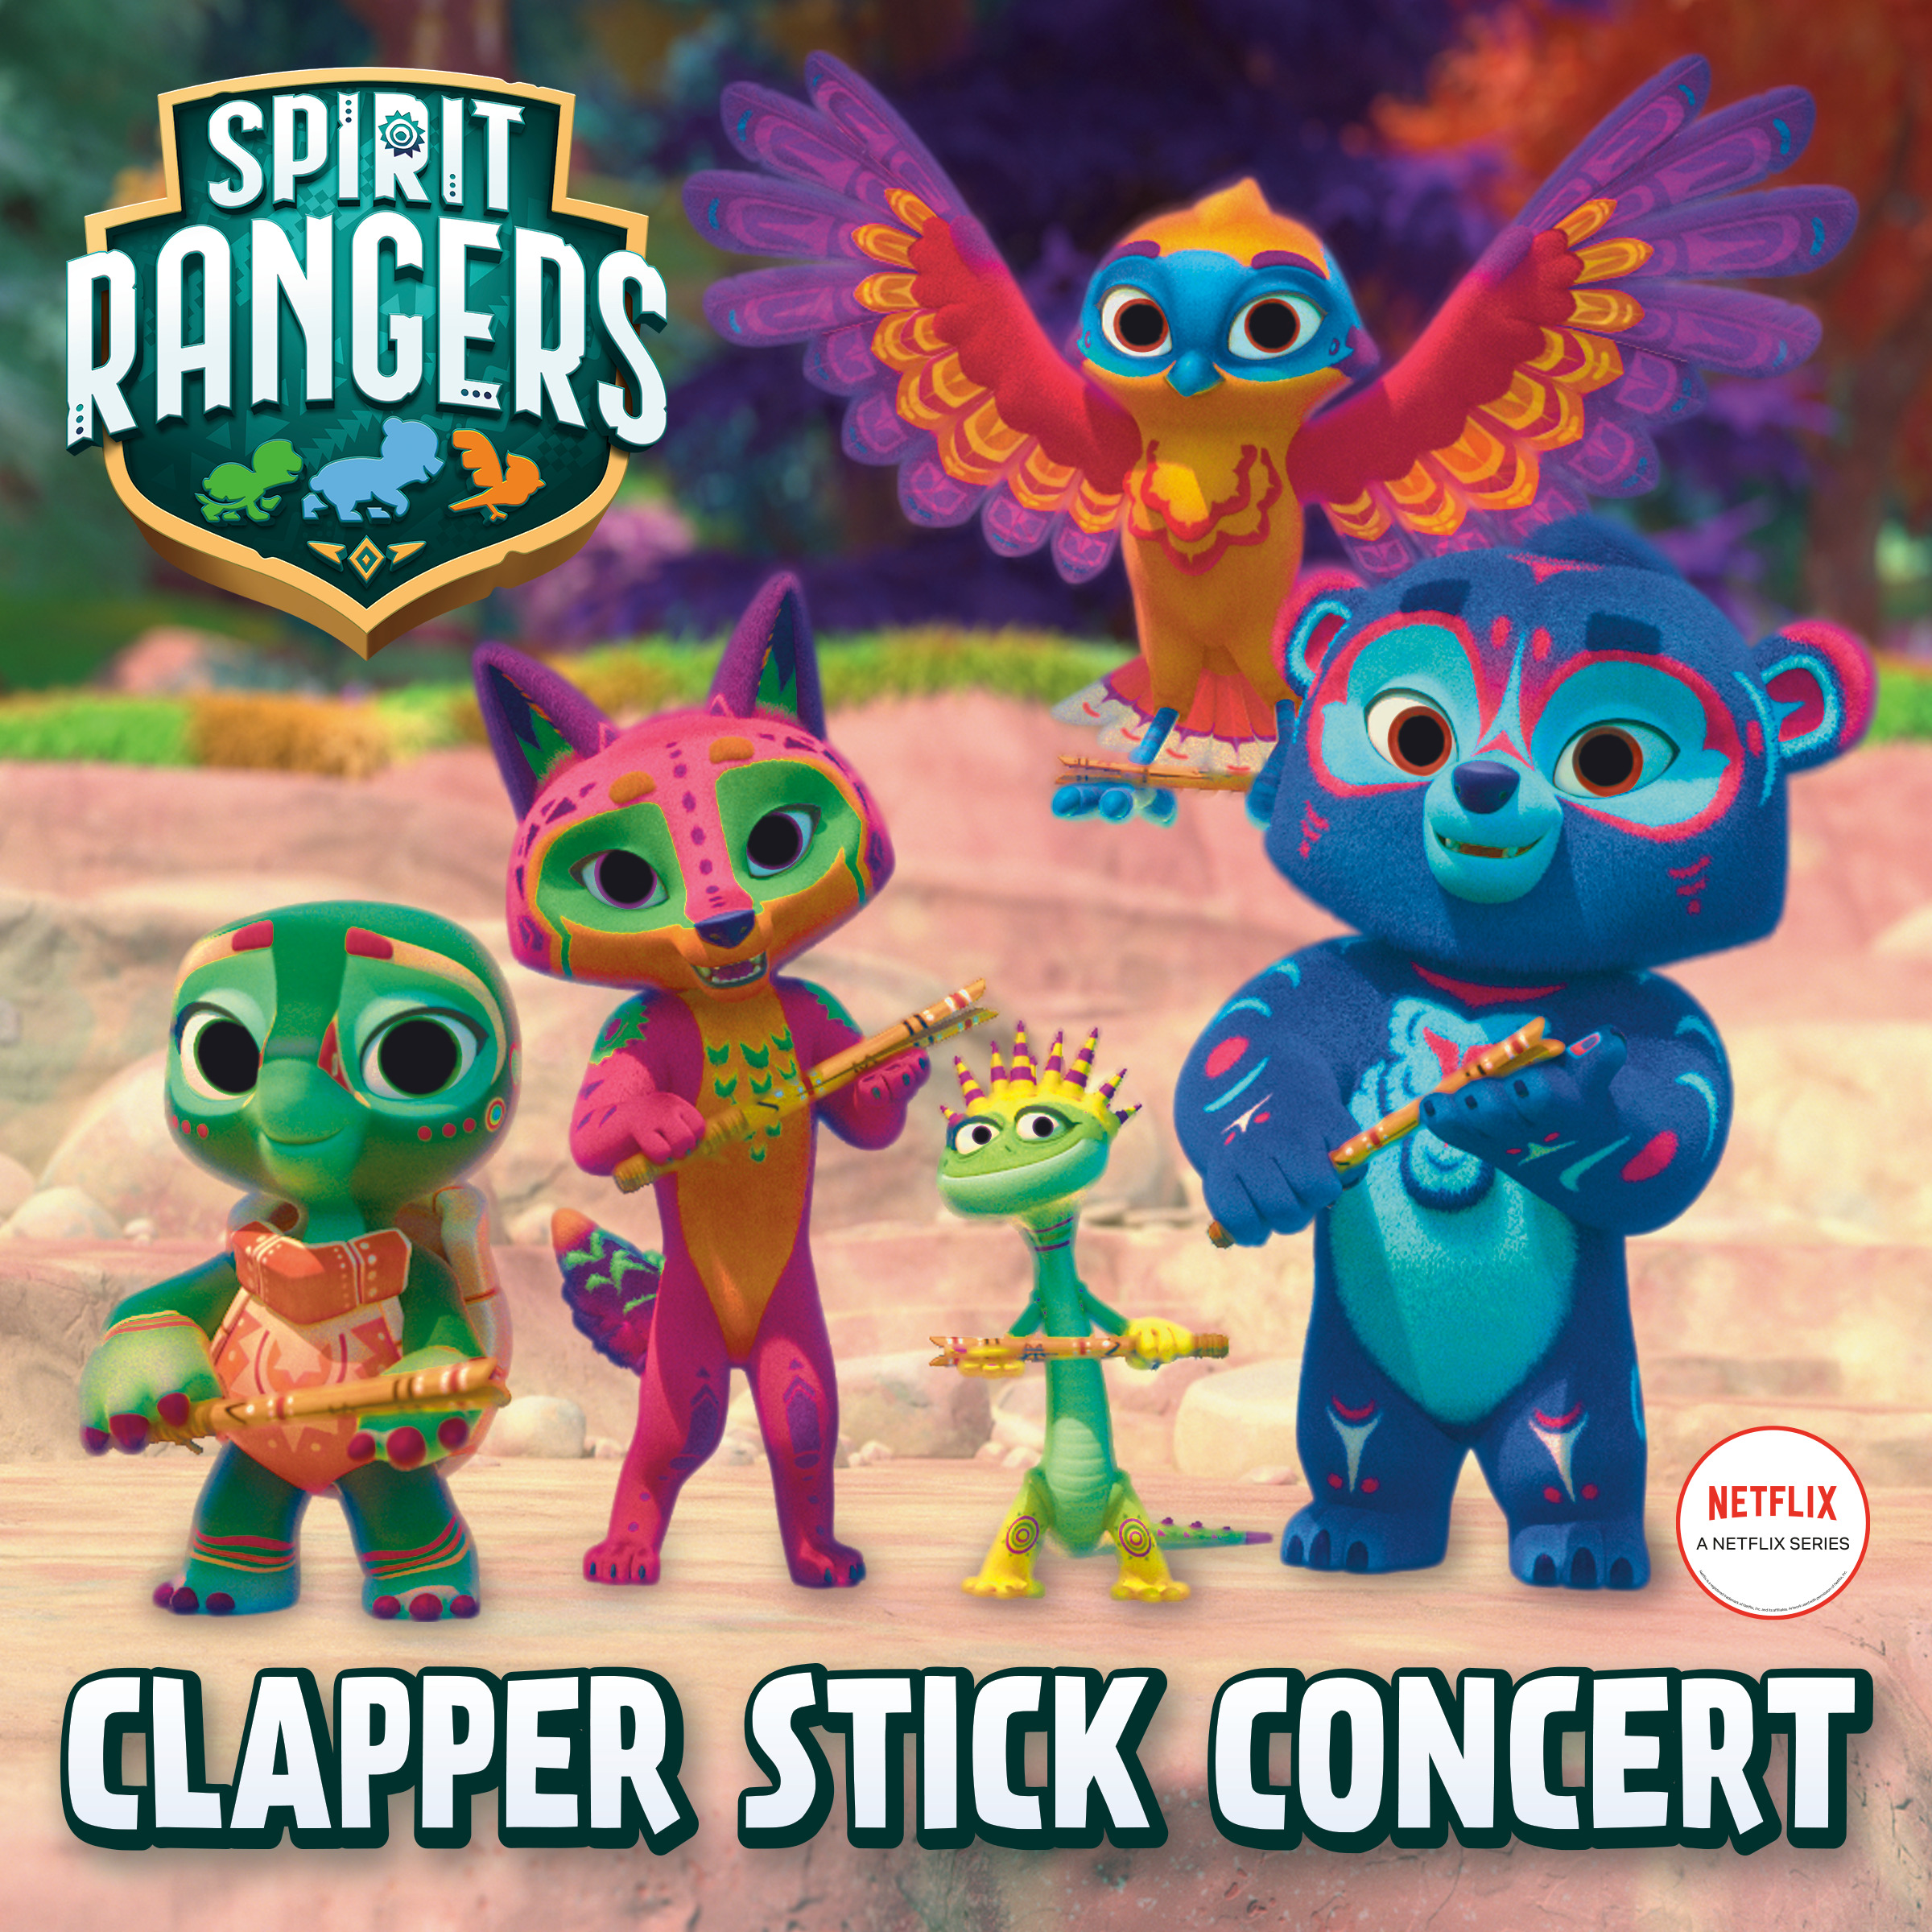 Clapper Stick Concert (Spirit Rangers) | Knight, JohnTom (Auteur)